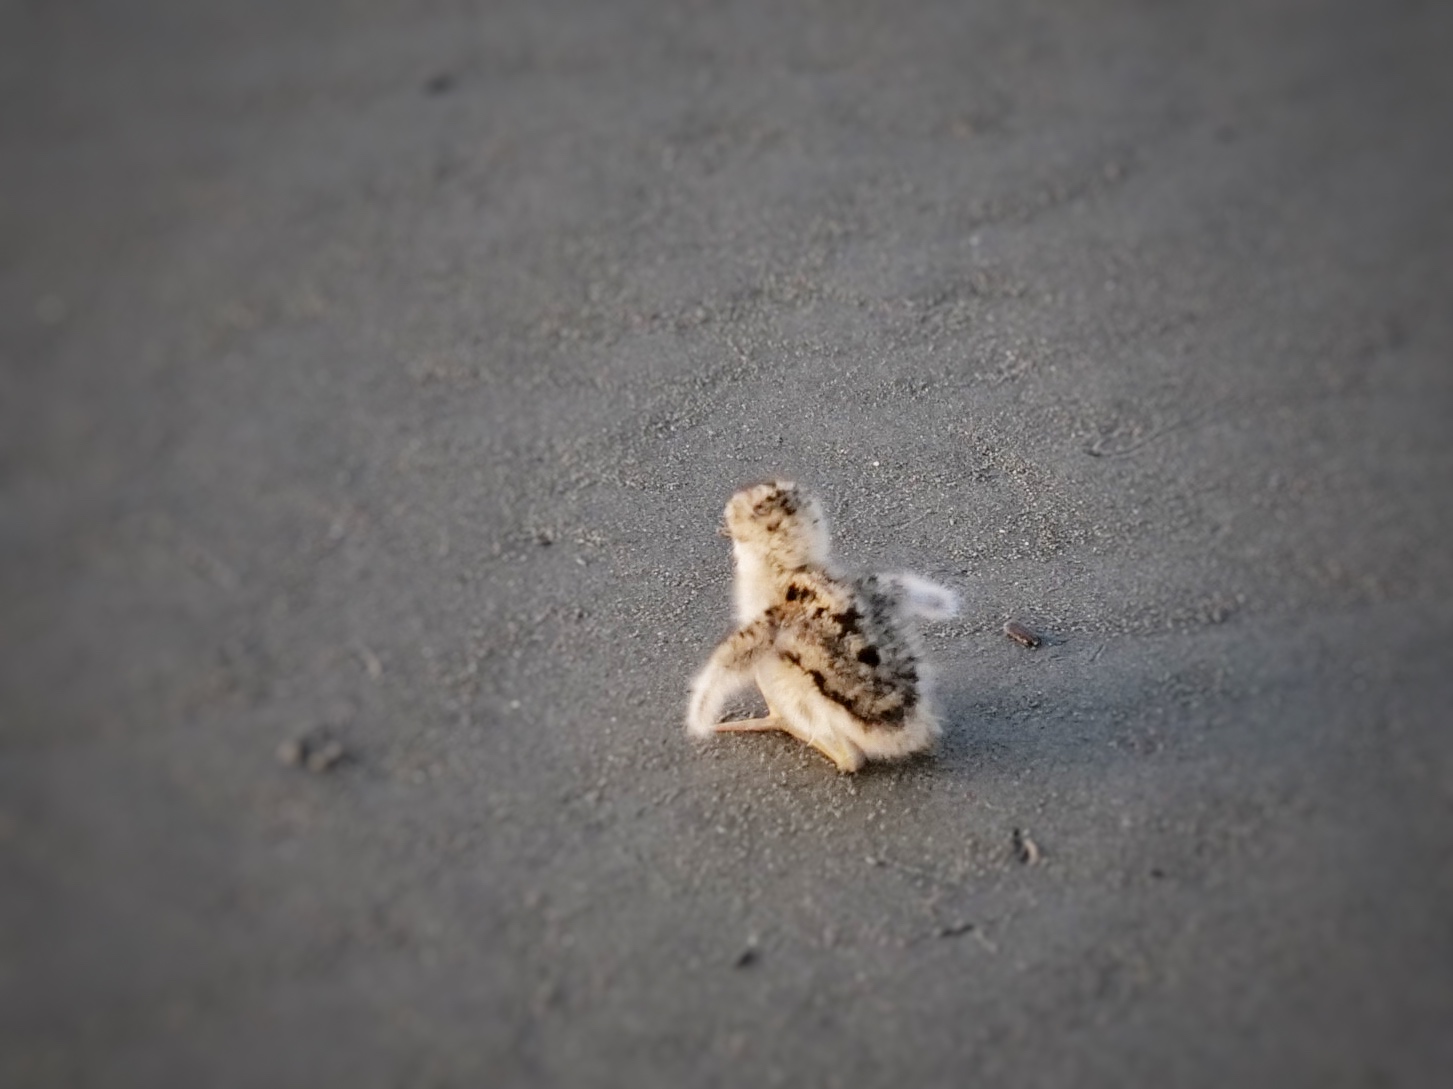 Tiny bird on sand with stubby wings spread. 